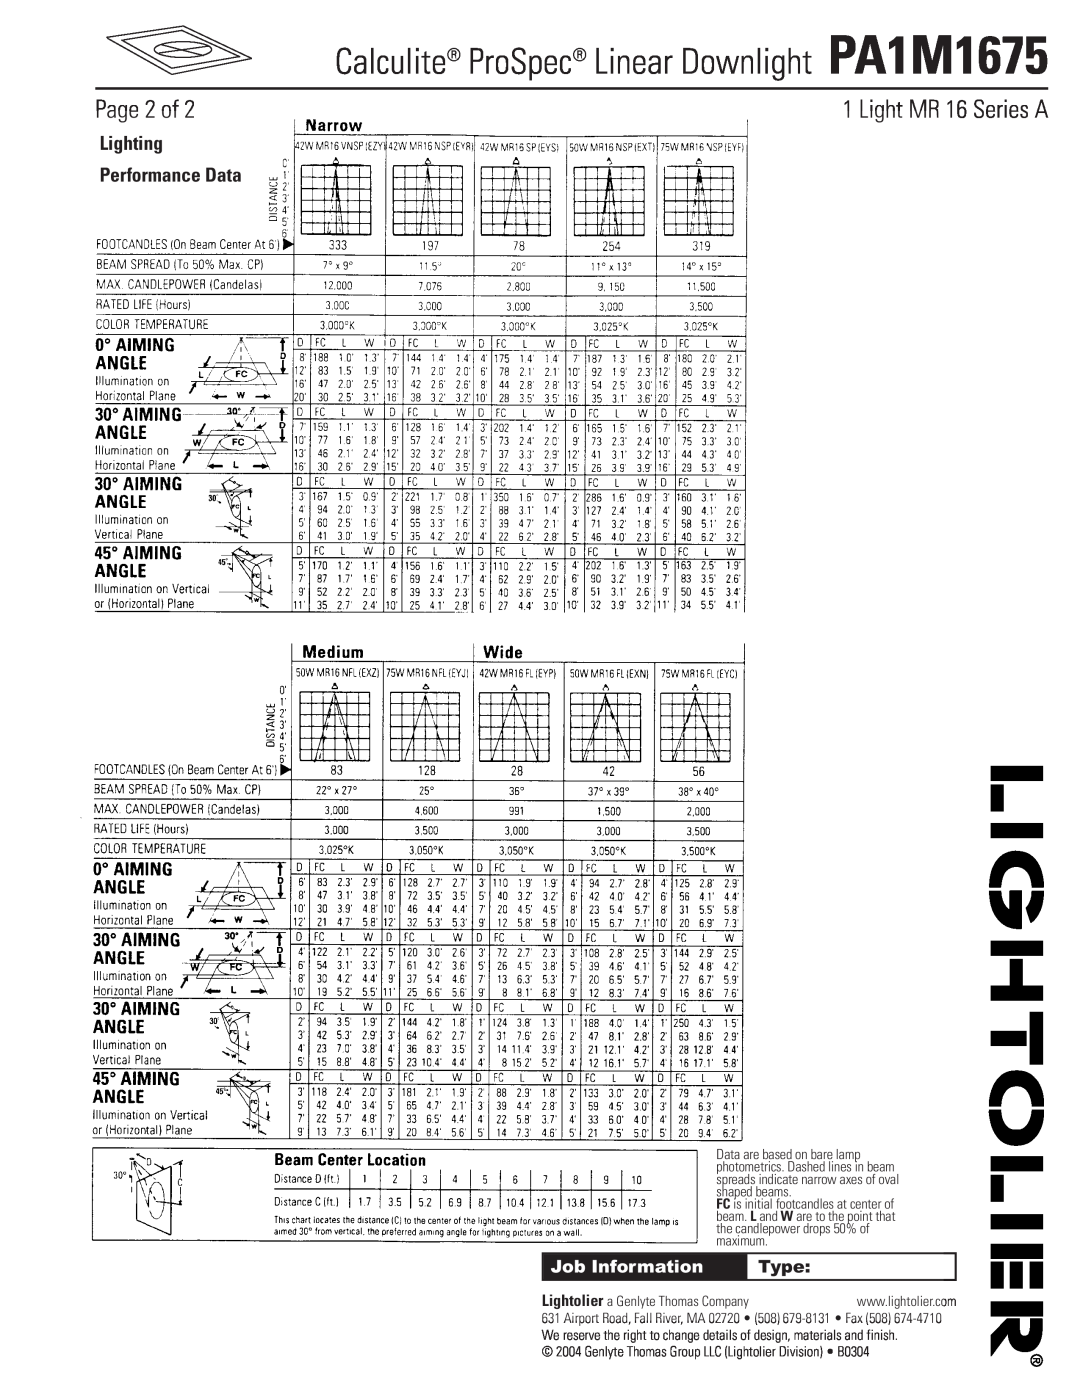 Lightolier Page 2 of, Lighting Performance Data, Calculite ProSpec Linear Downlight PA1M1675, Light MR 16 Series A 